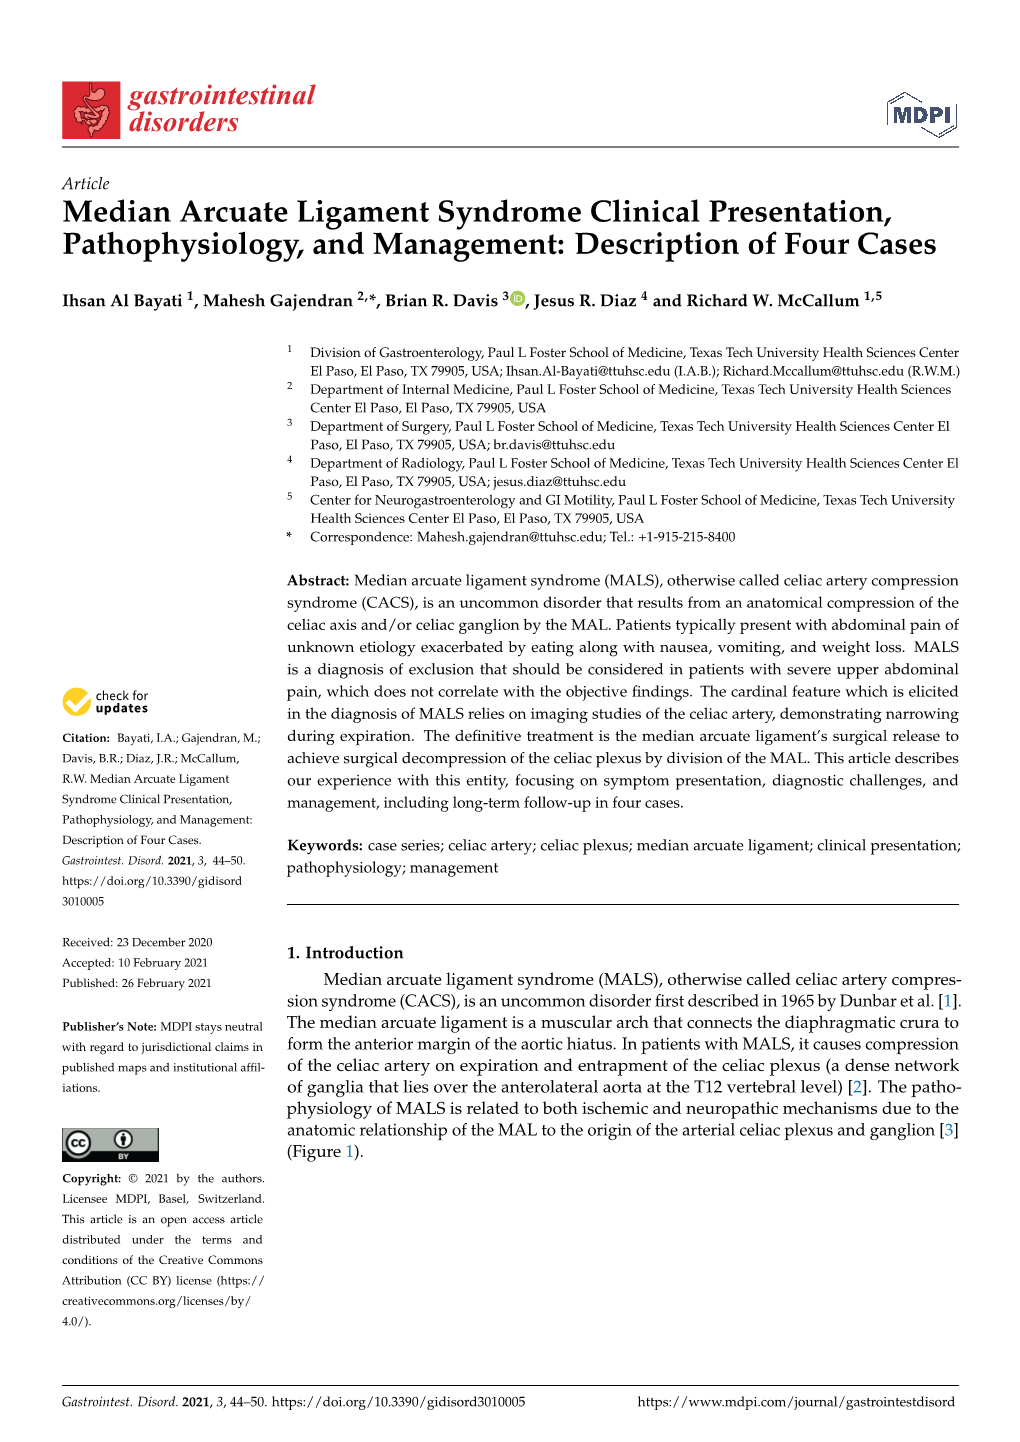 Median Arcuate Ligament Syndrome Clinical Presentation, Pathophysiology, and Management: Description of Four Cases